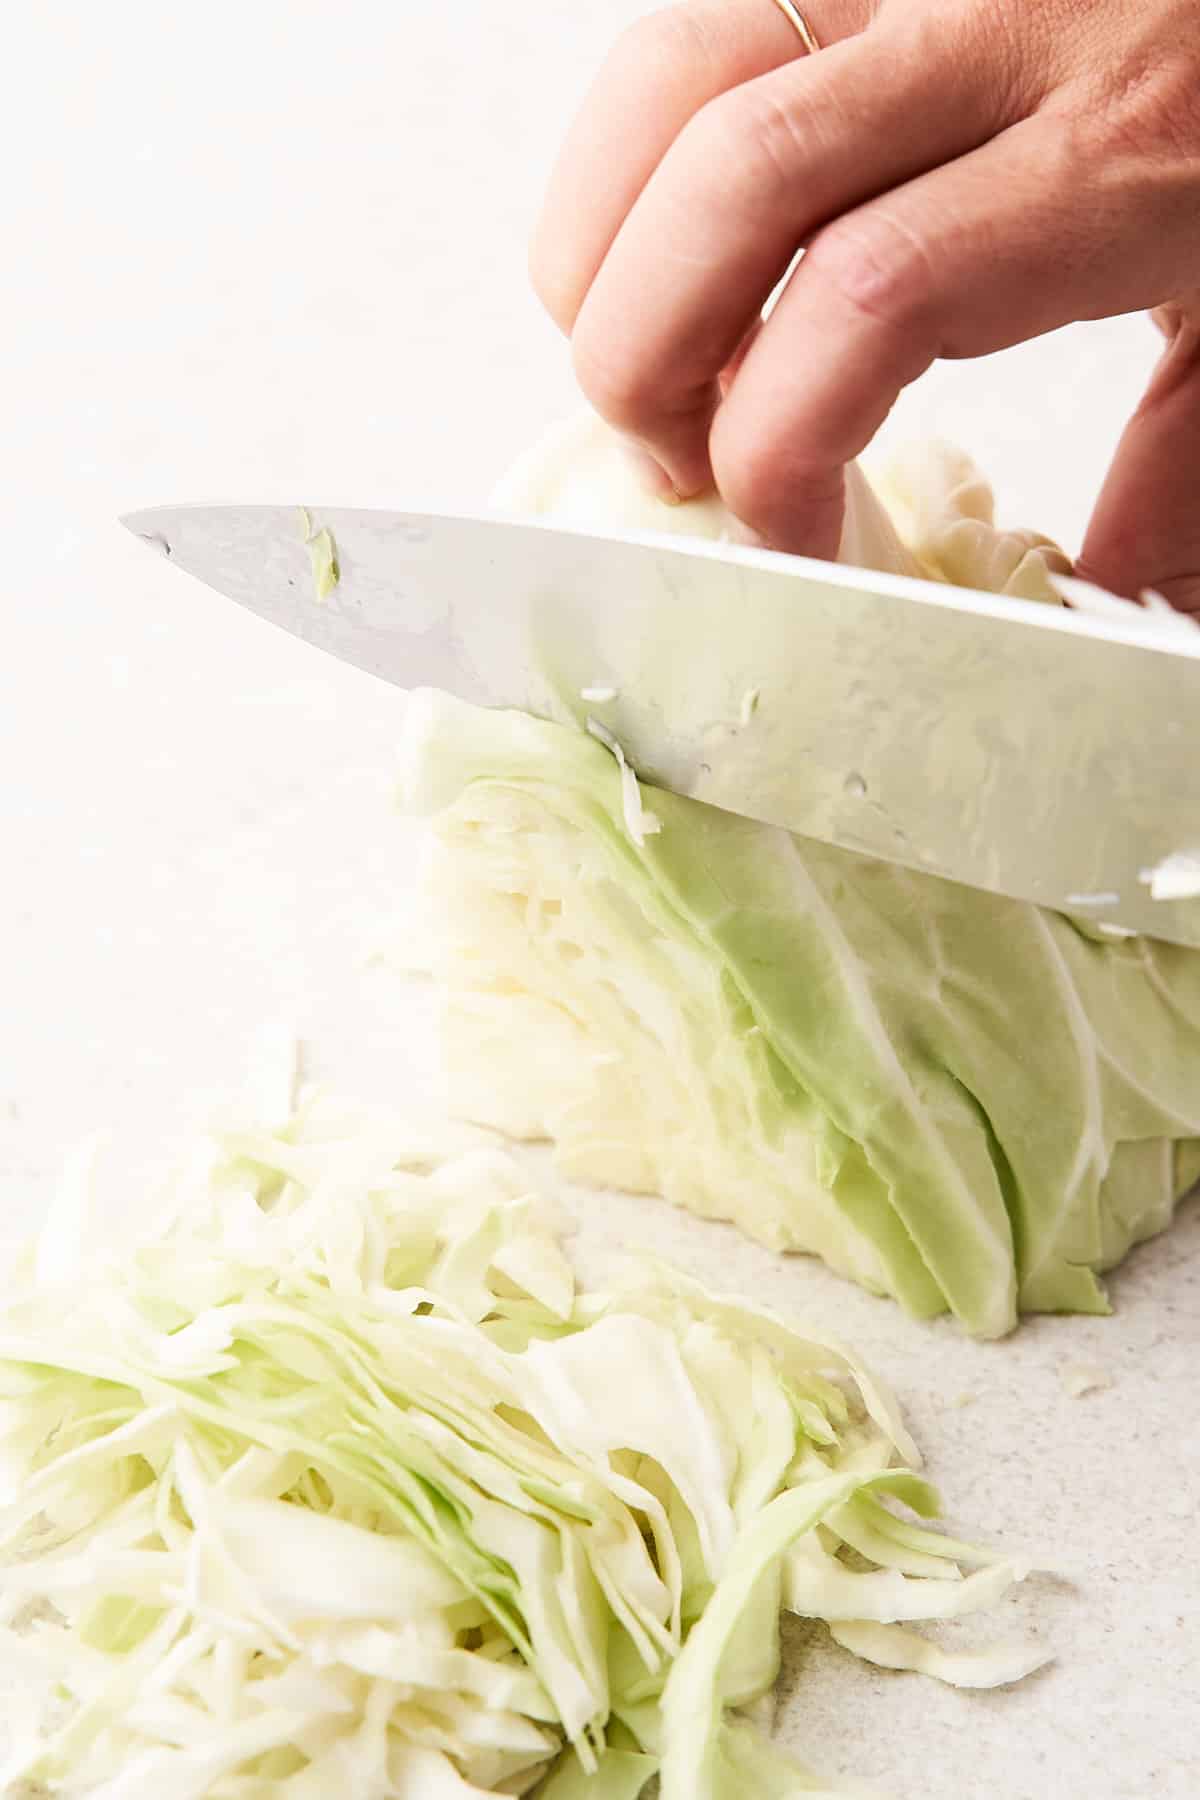 Slicing cabbage.